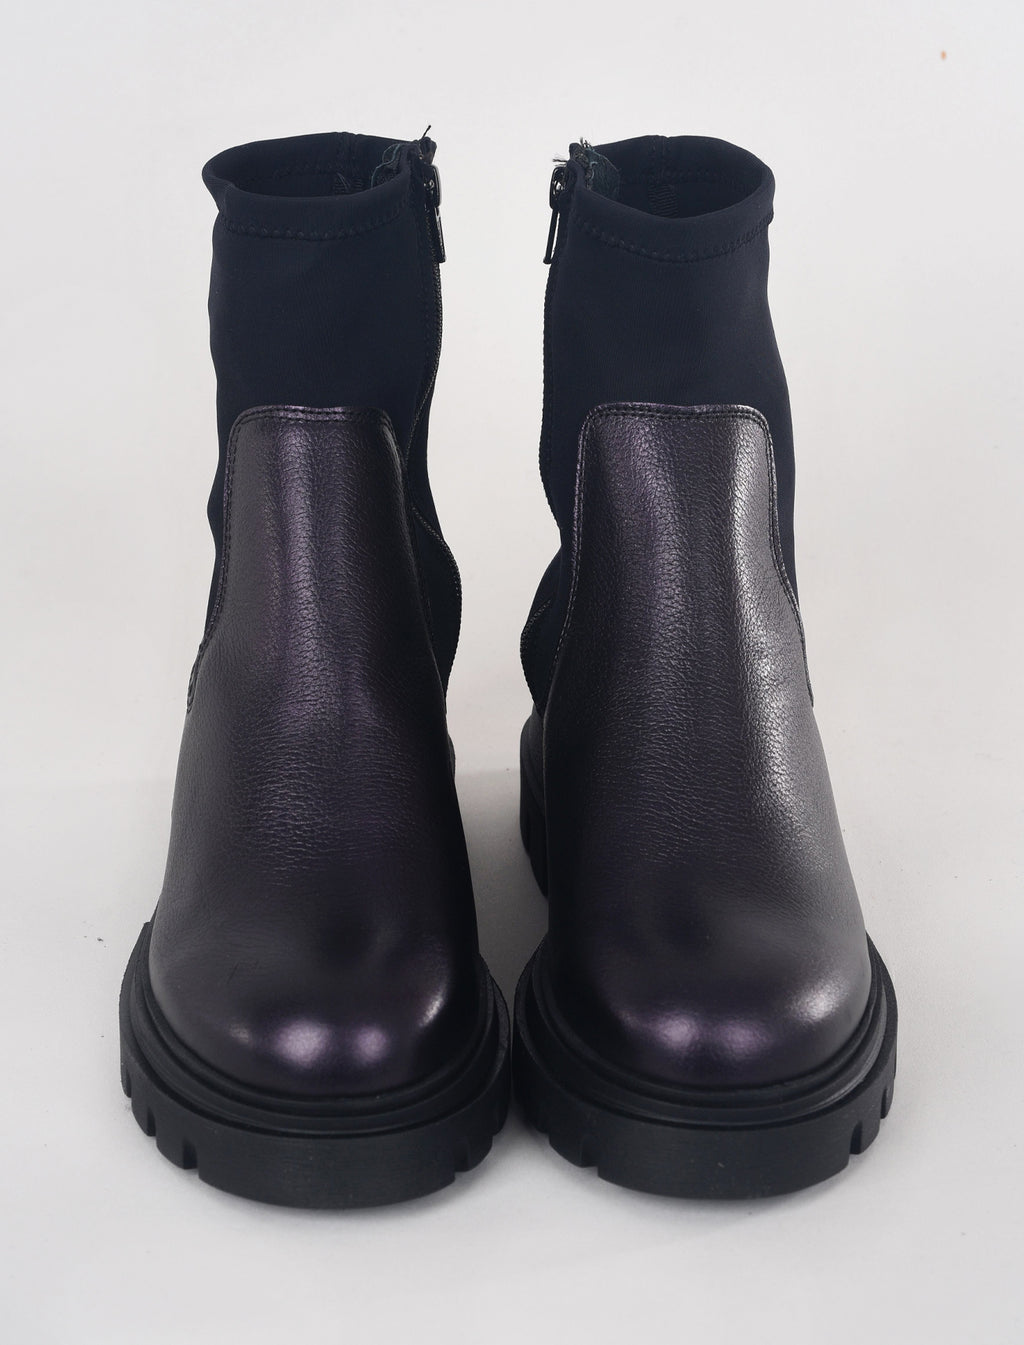 Five Elasticated Boot, Magenta/Black